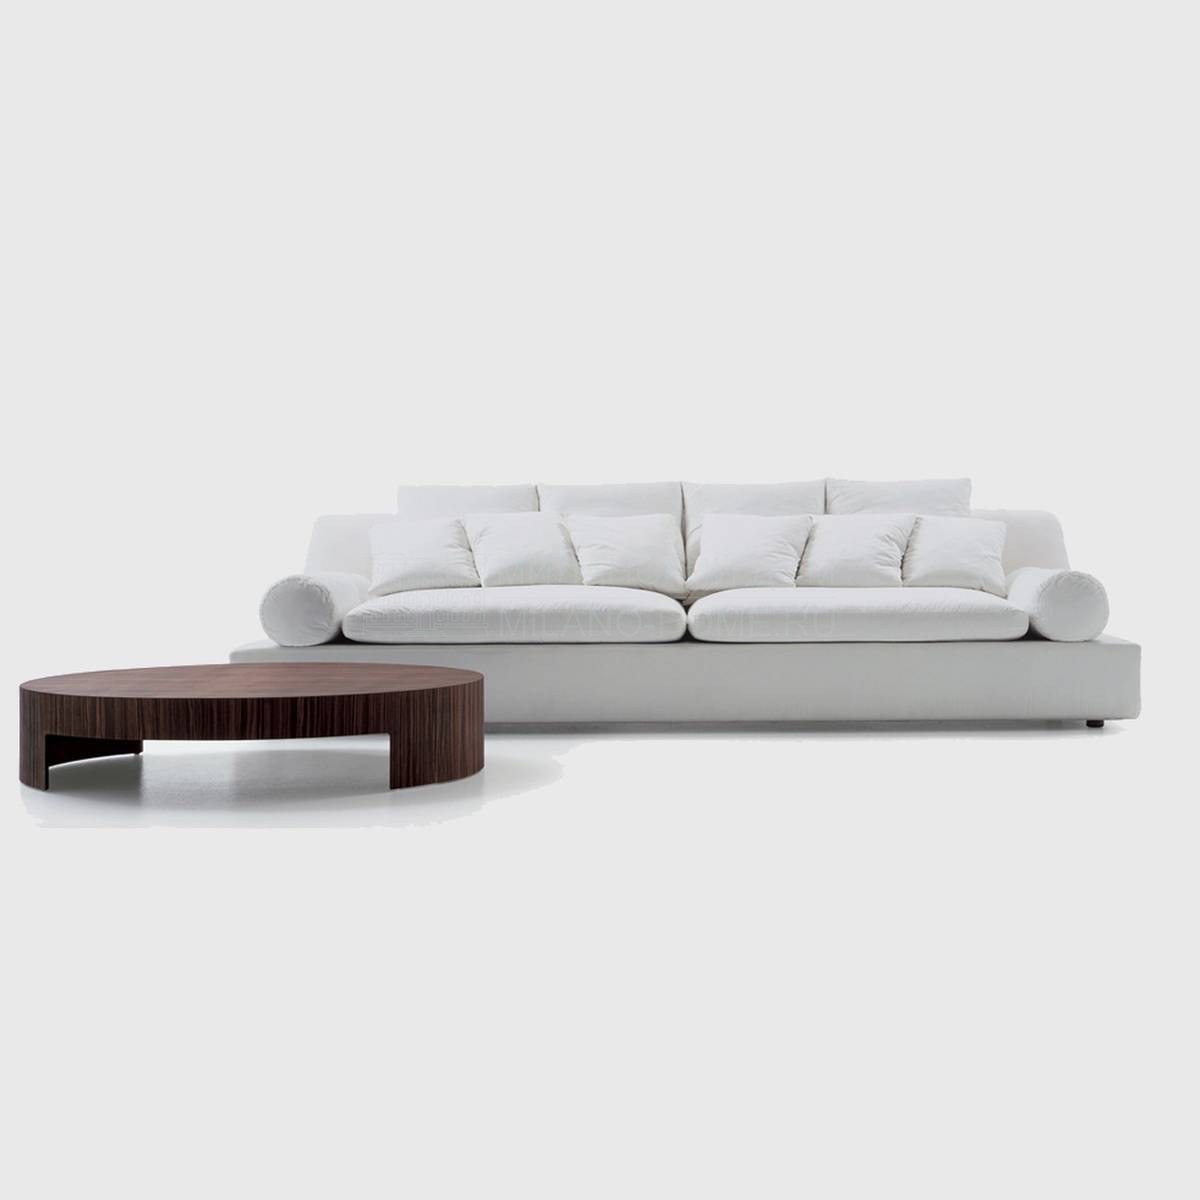 Прямой диван Tender/ sofa из Италии фабрики NUBE